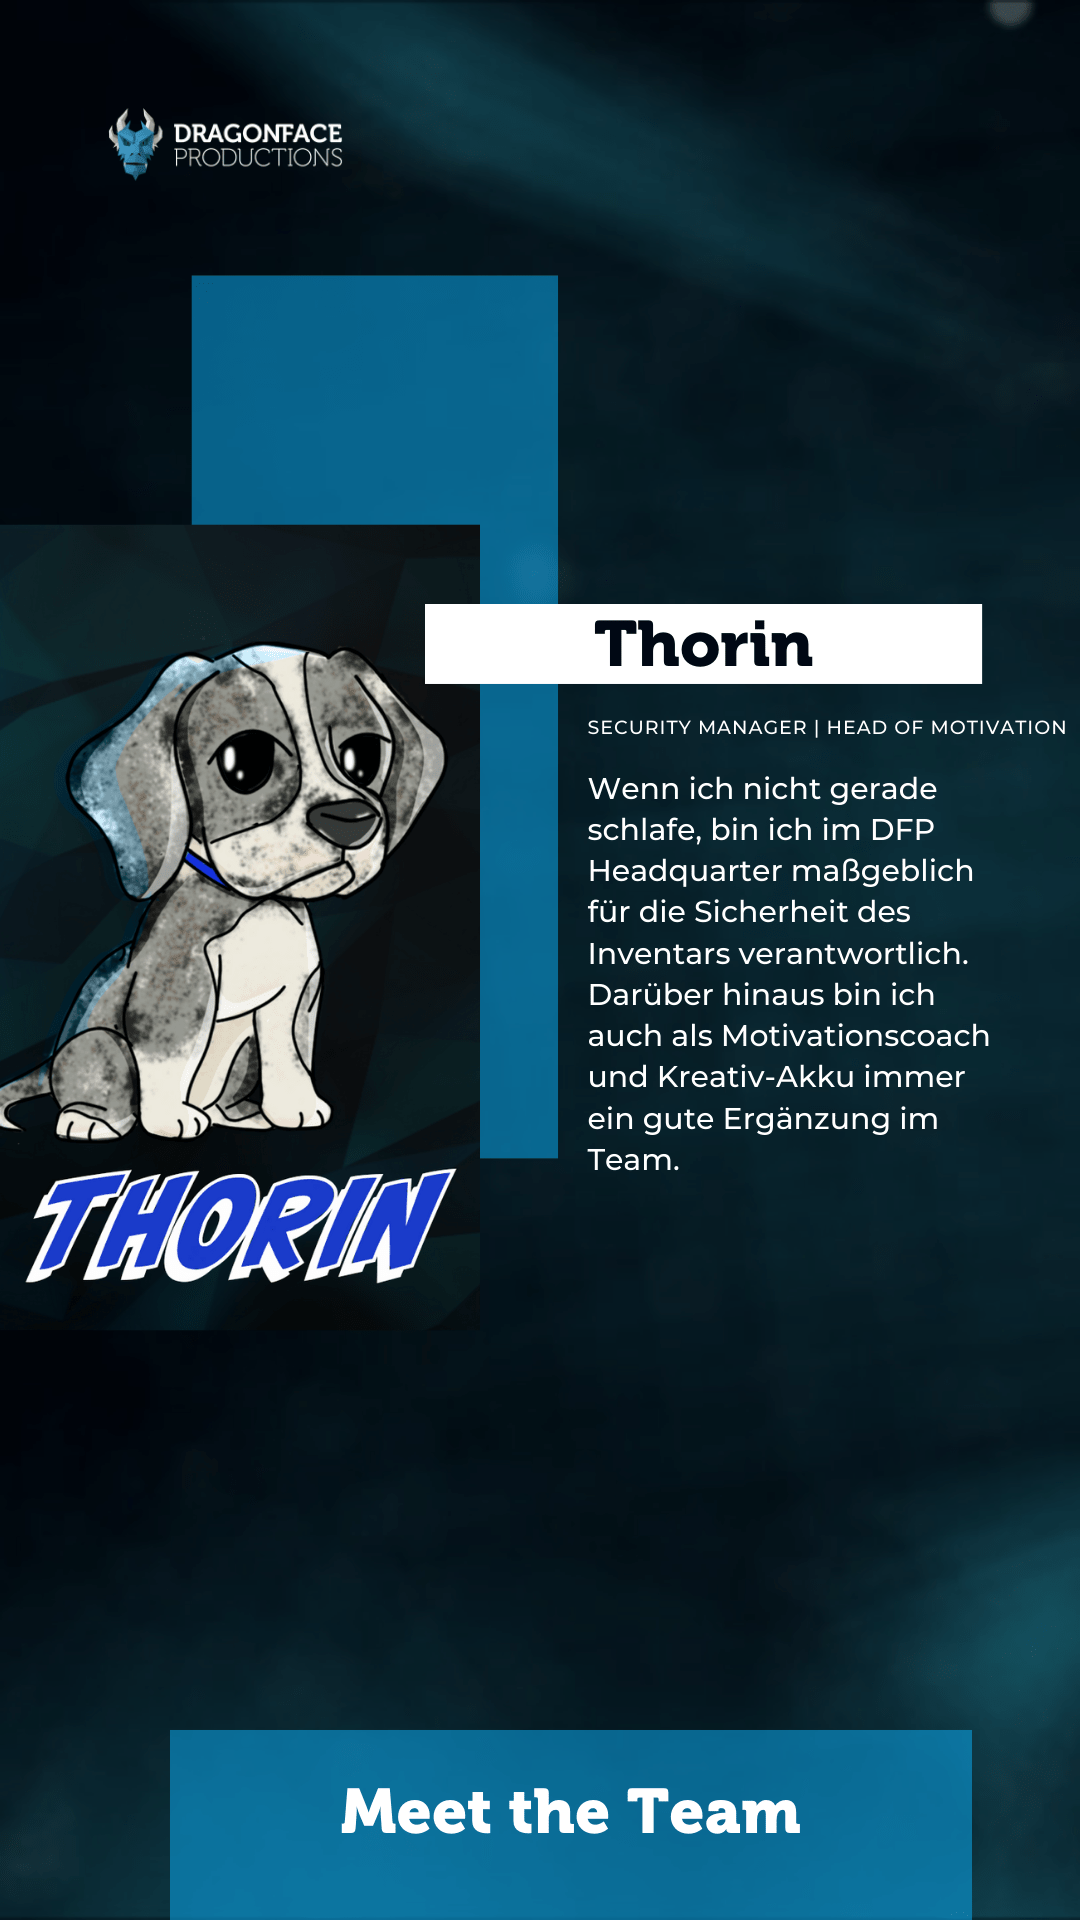 Team Thorin